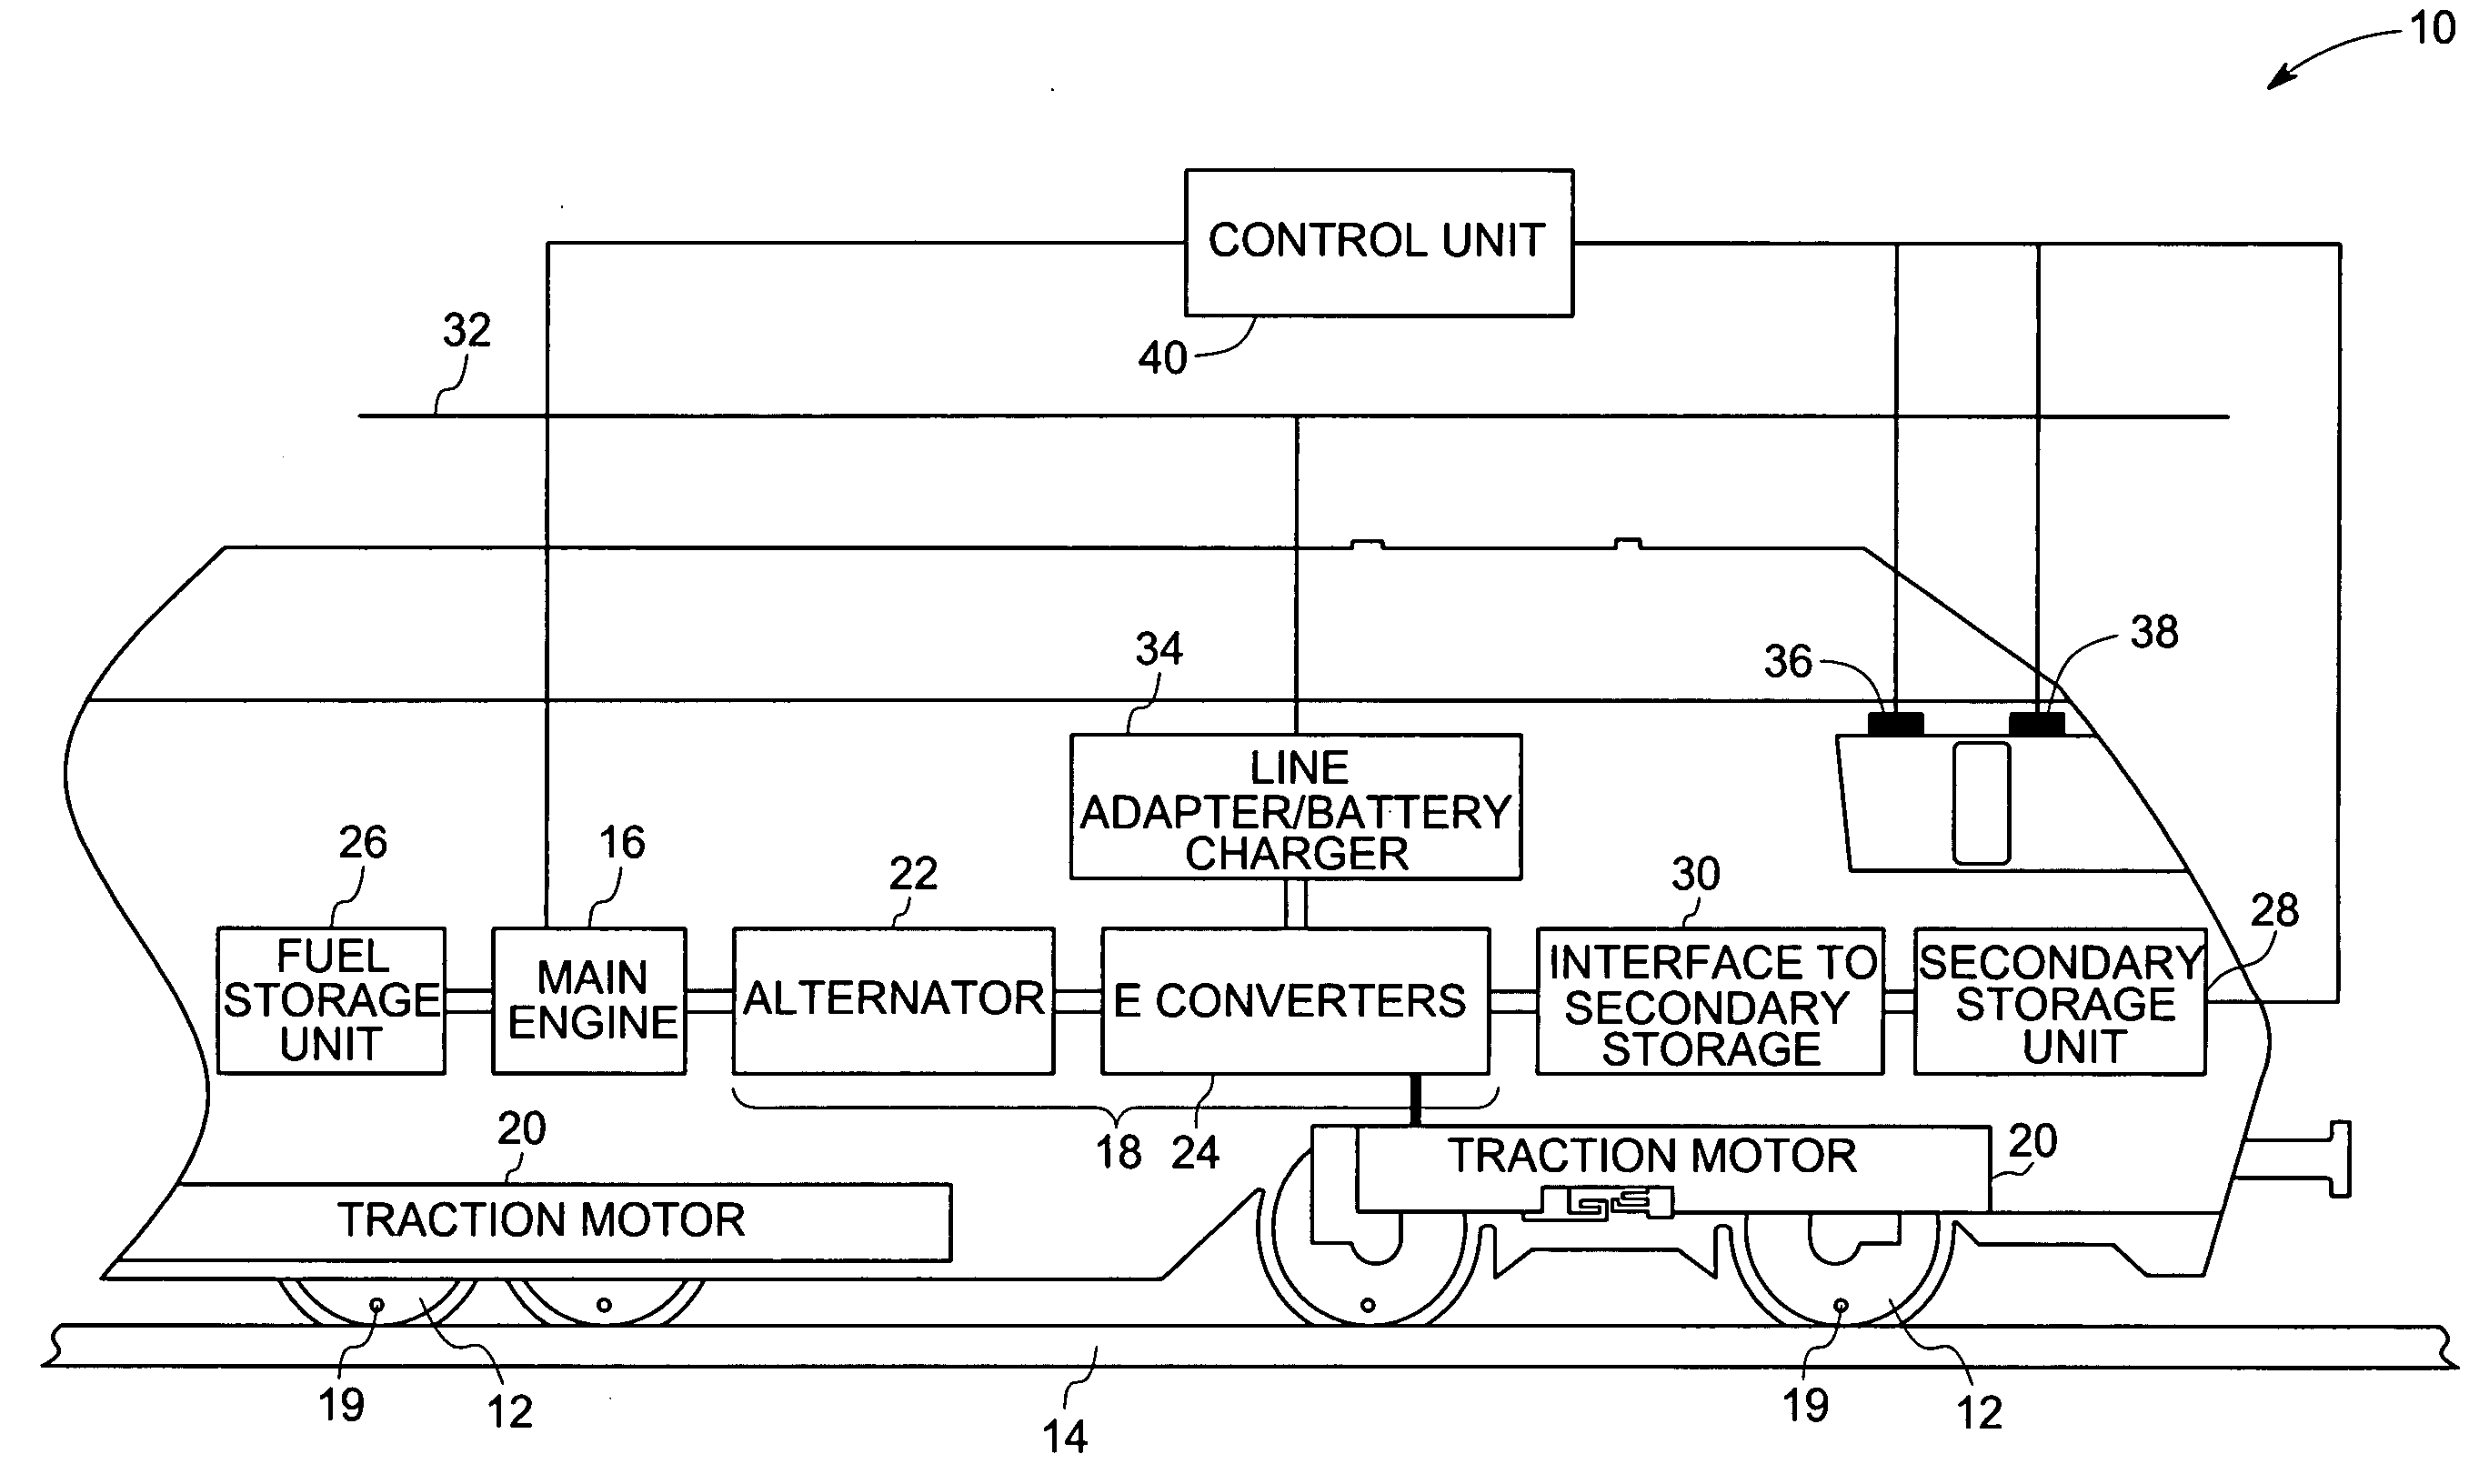 Hybrid locomotive and method of operating the same